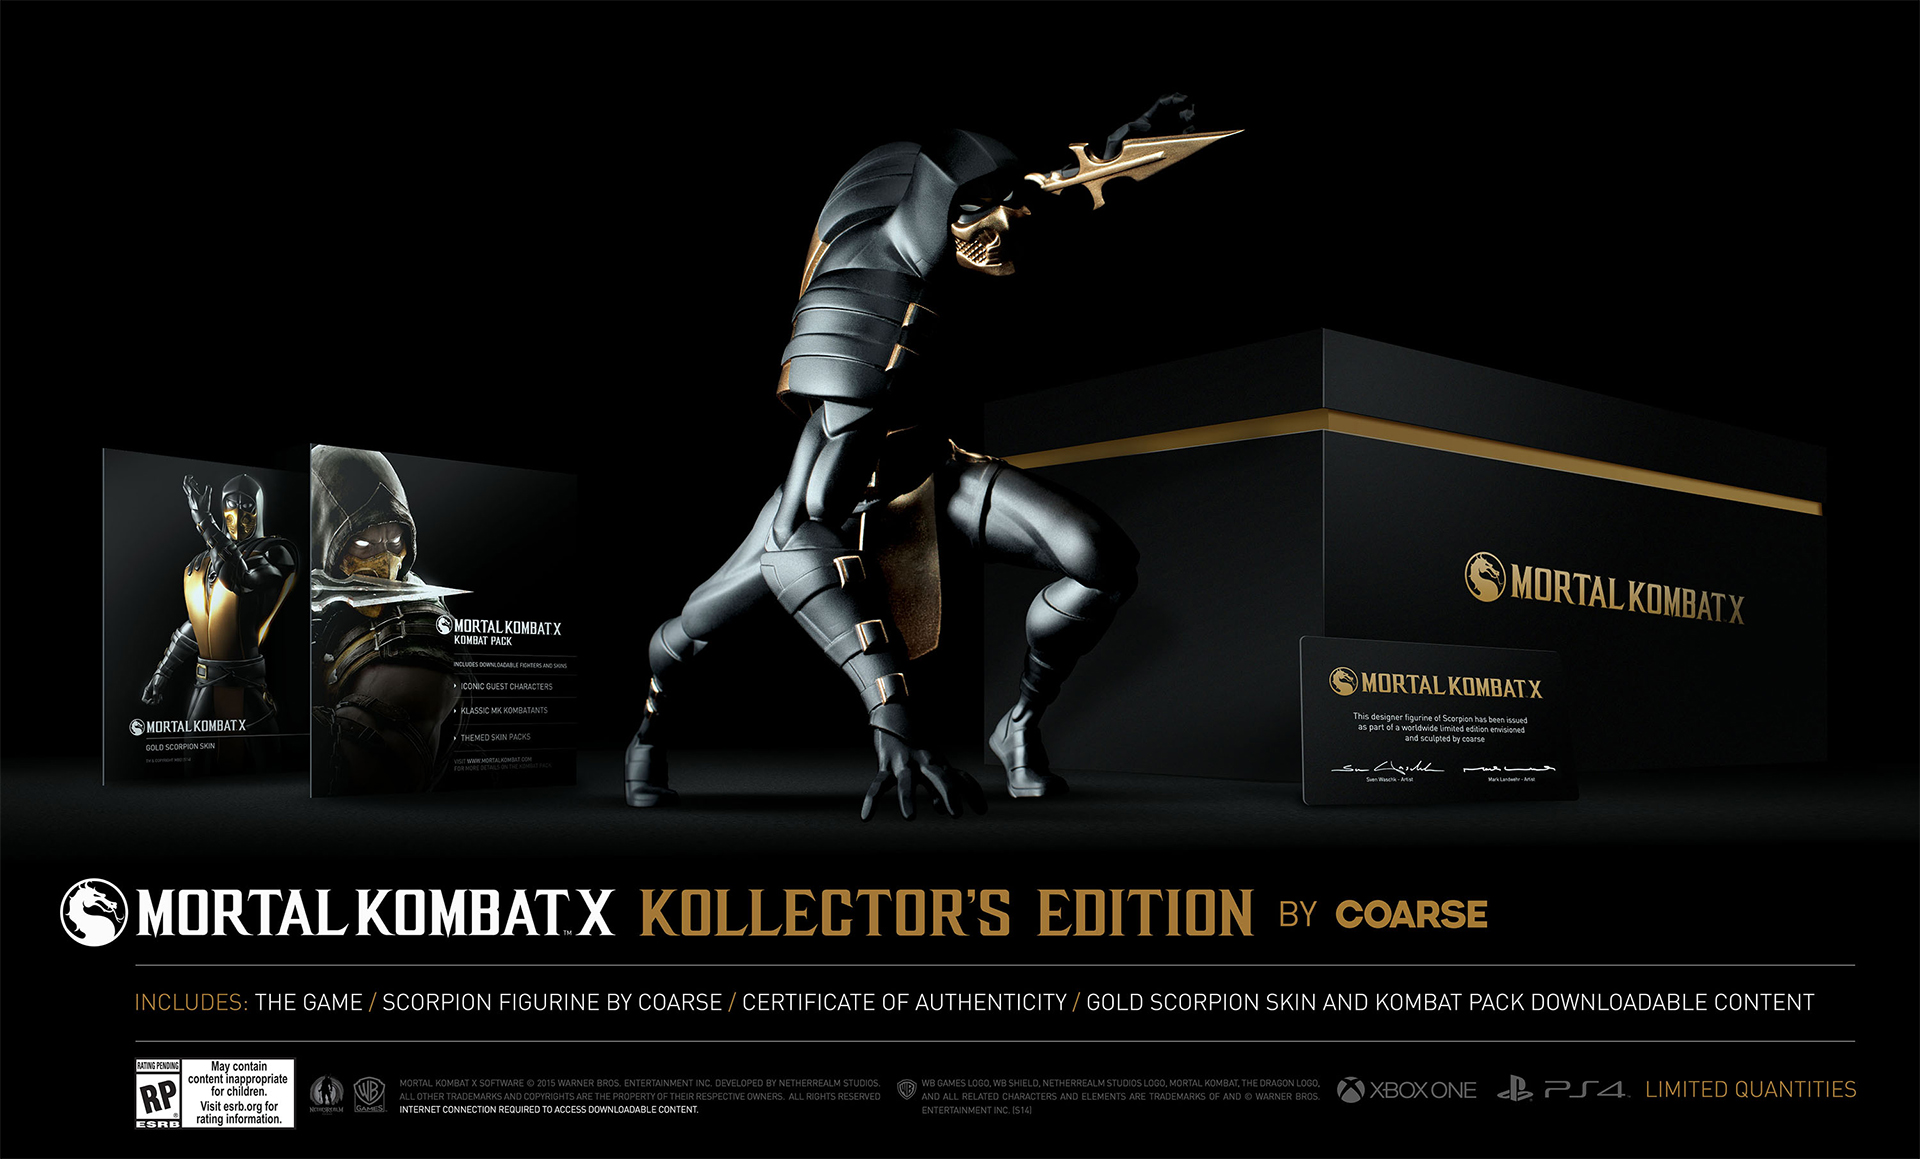 Mortal-Kombat-X-%E2%80%94-Kollektors-Edition-By-Coarse.jpg